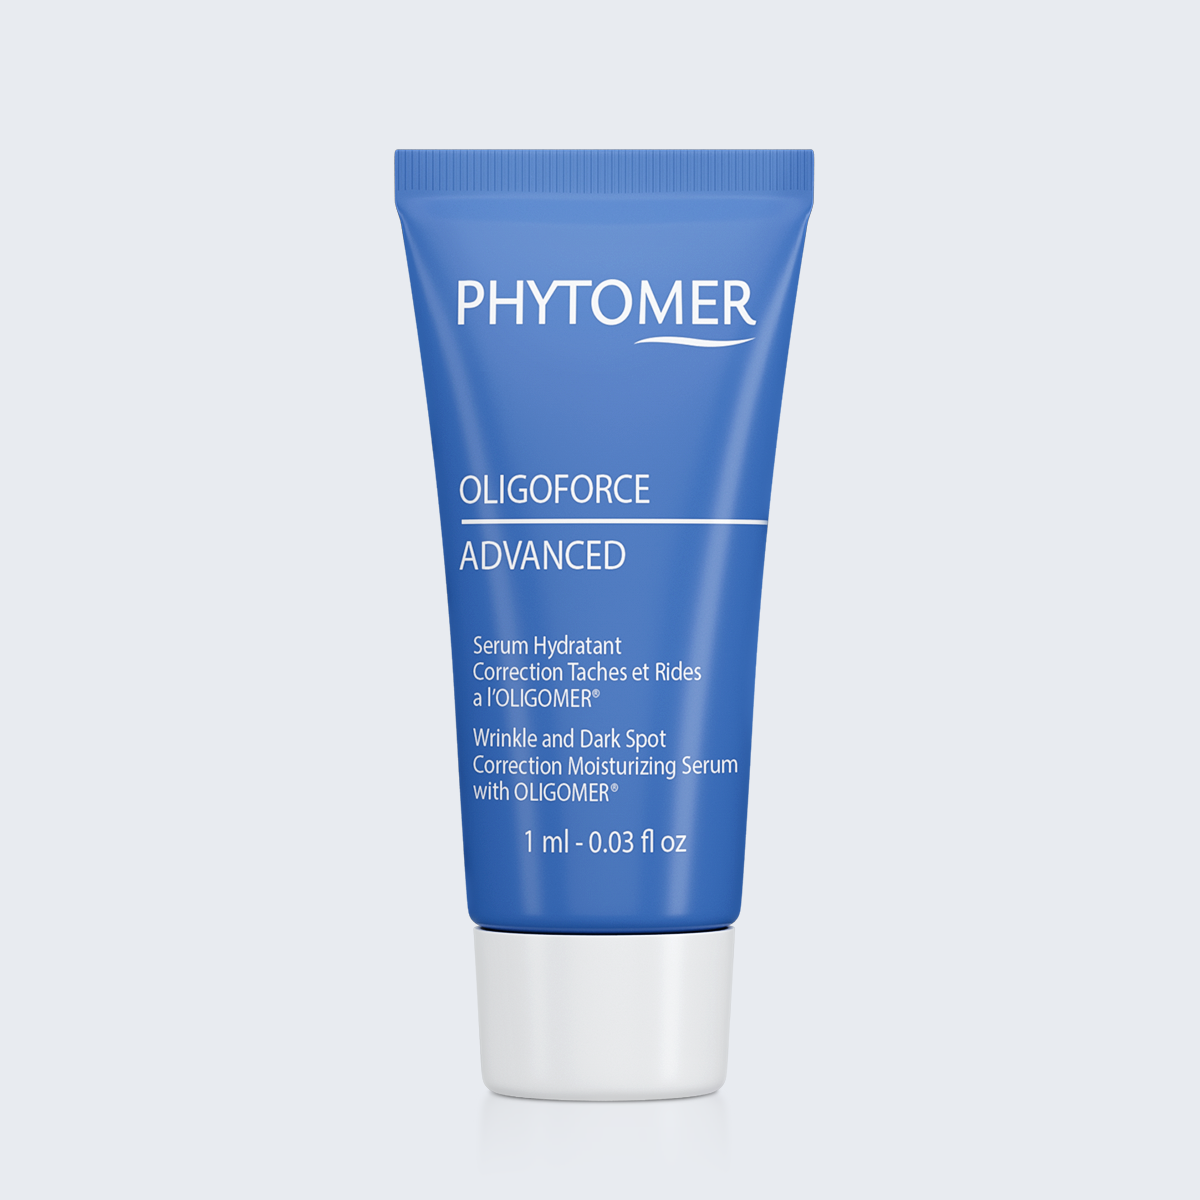 Sample: Phytomer Oligoforce Advanced Wrinkle Serum